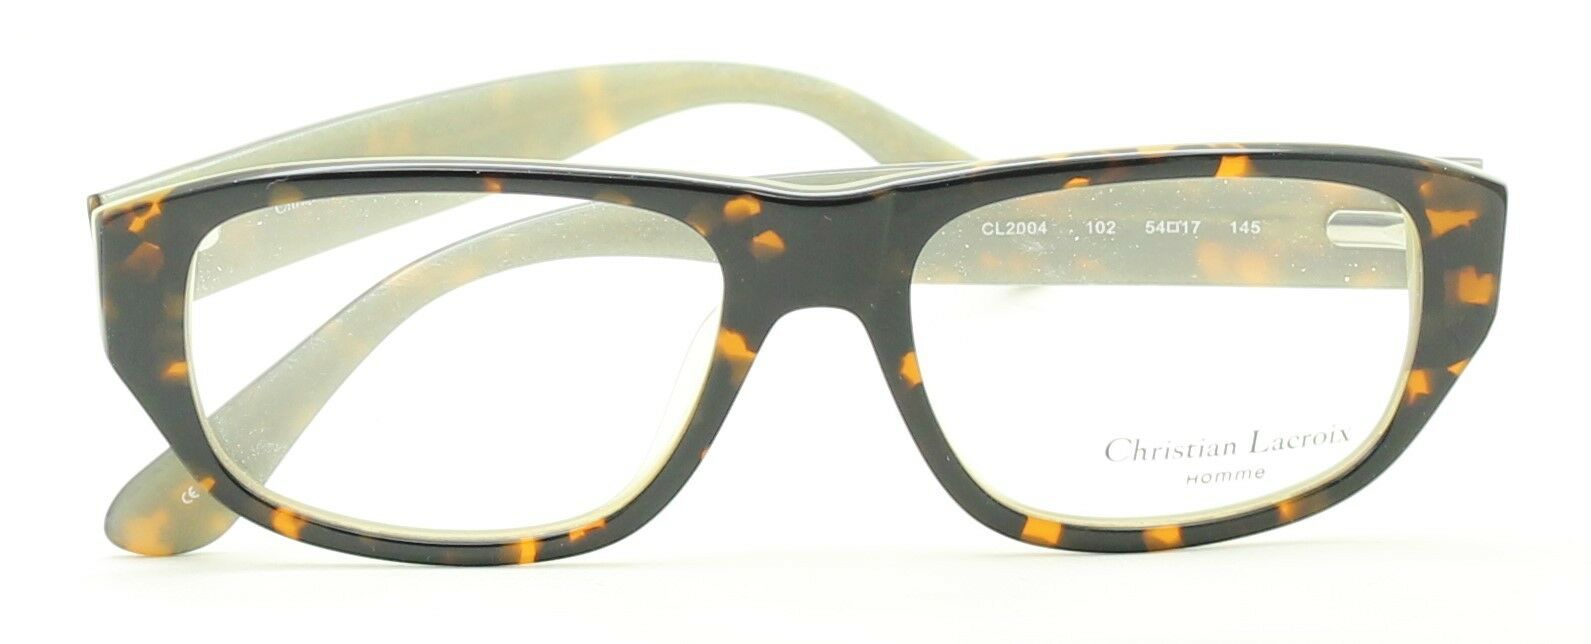 CHRISTIAN LACROIX HOMME CL2004 102 Eyewear RX Optical FRAMES Eyeglasses Glasses